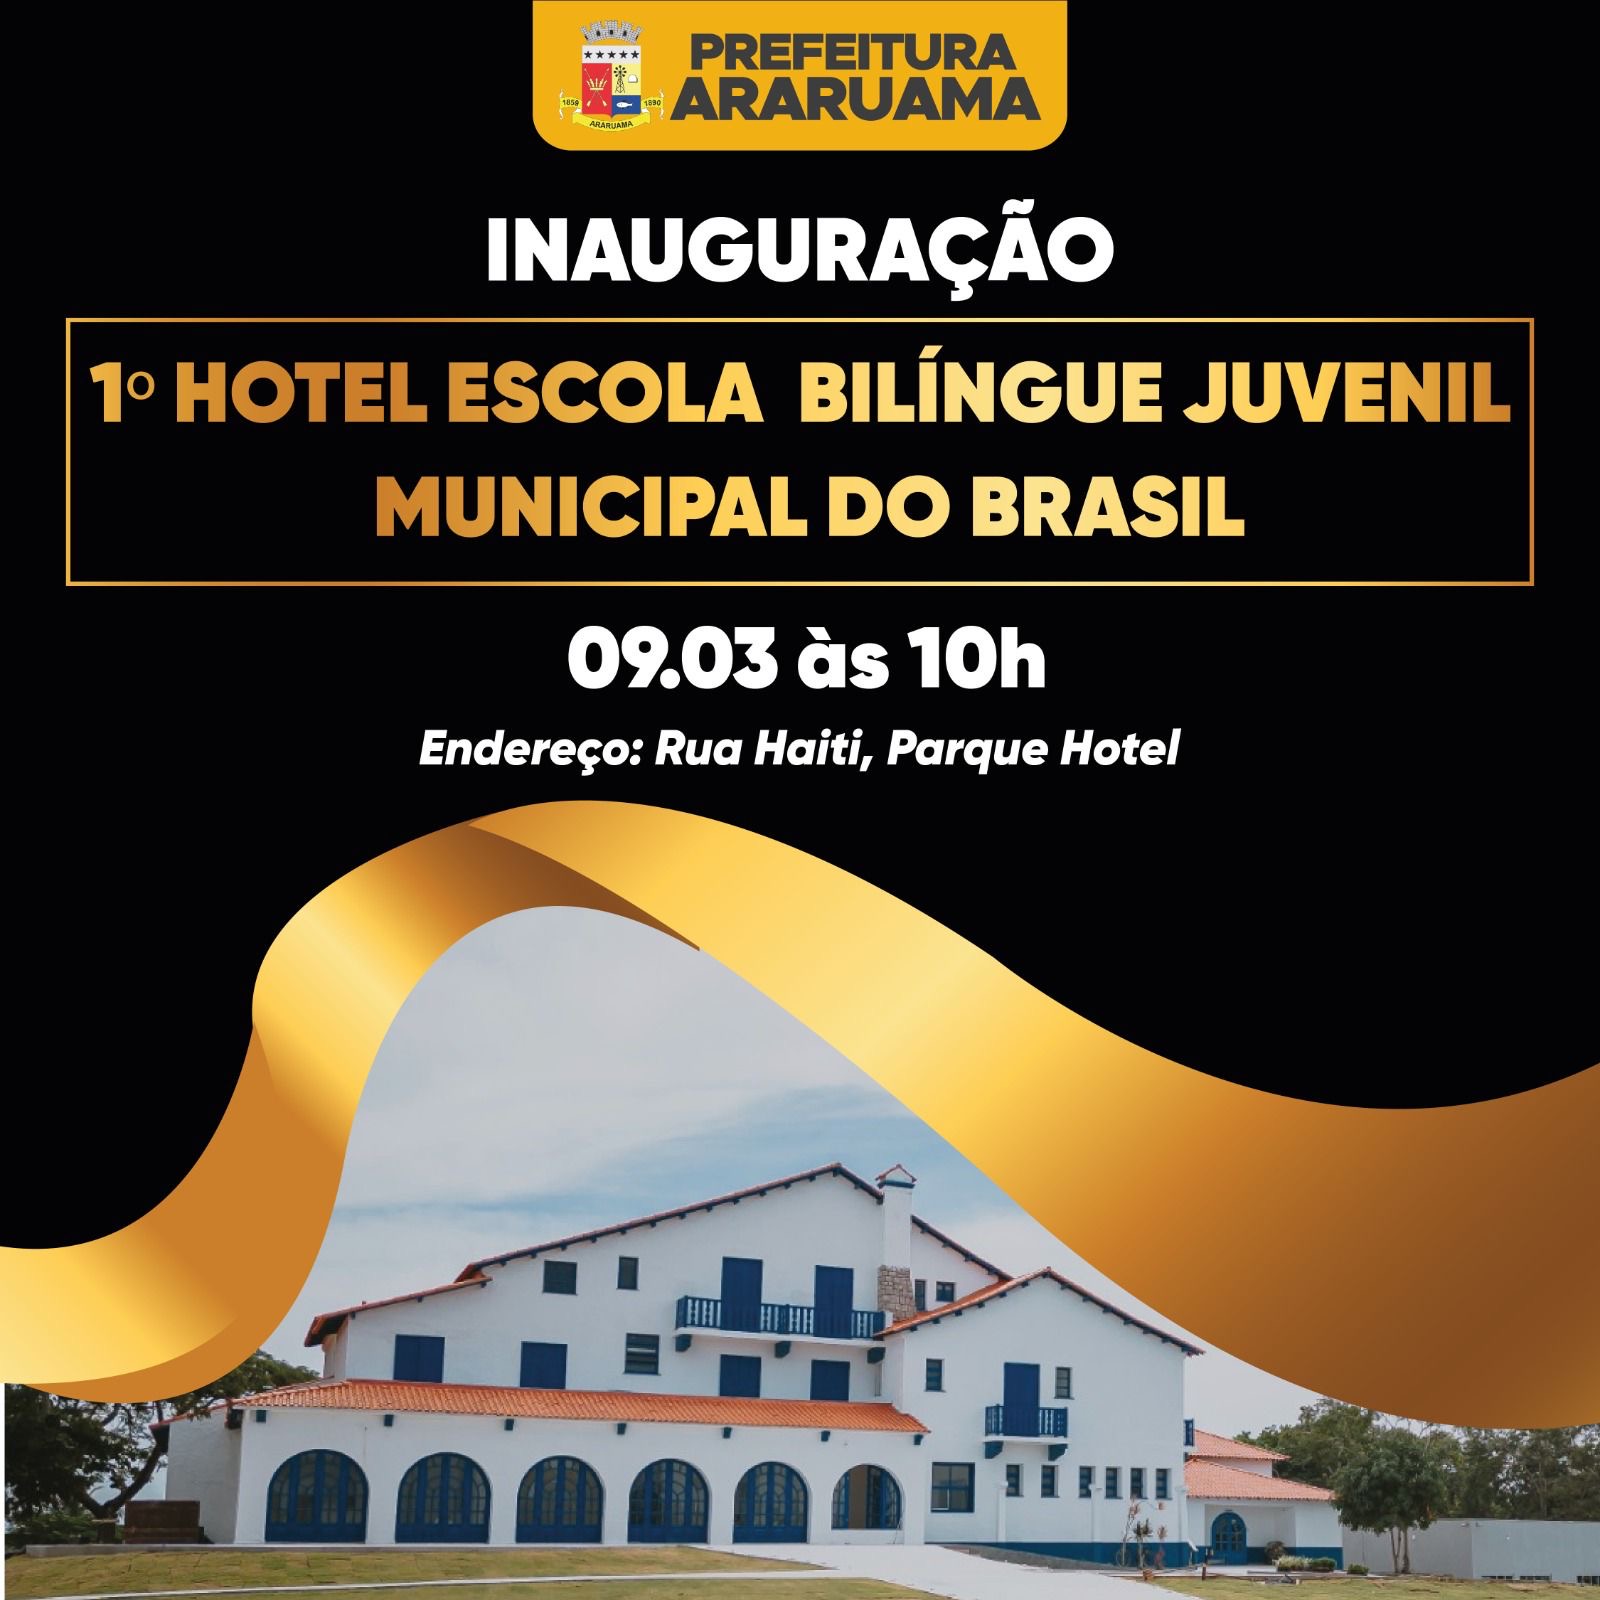 Prefeitura de Araruama vai inaugurar o 1º Hotel Escola Bilíngue Juvenil Municipal do Brasil